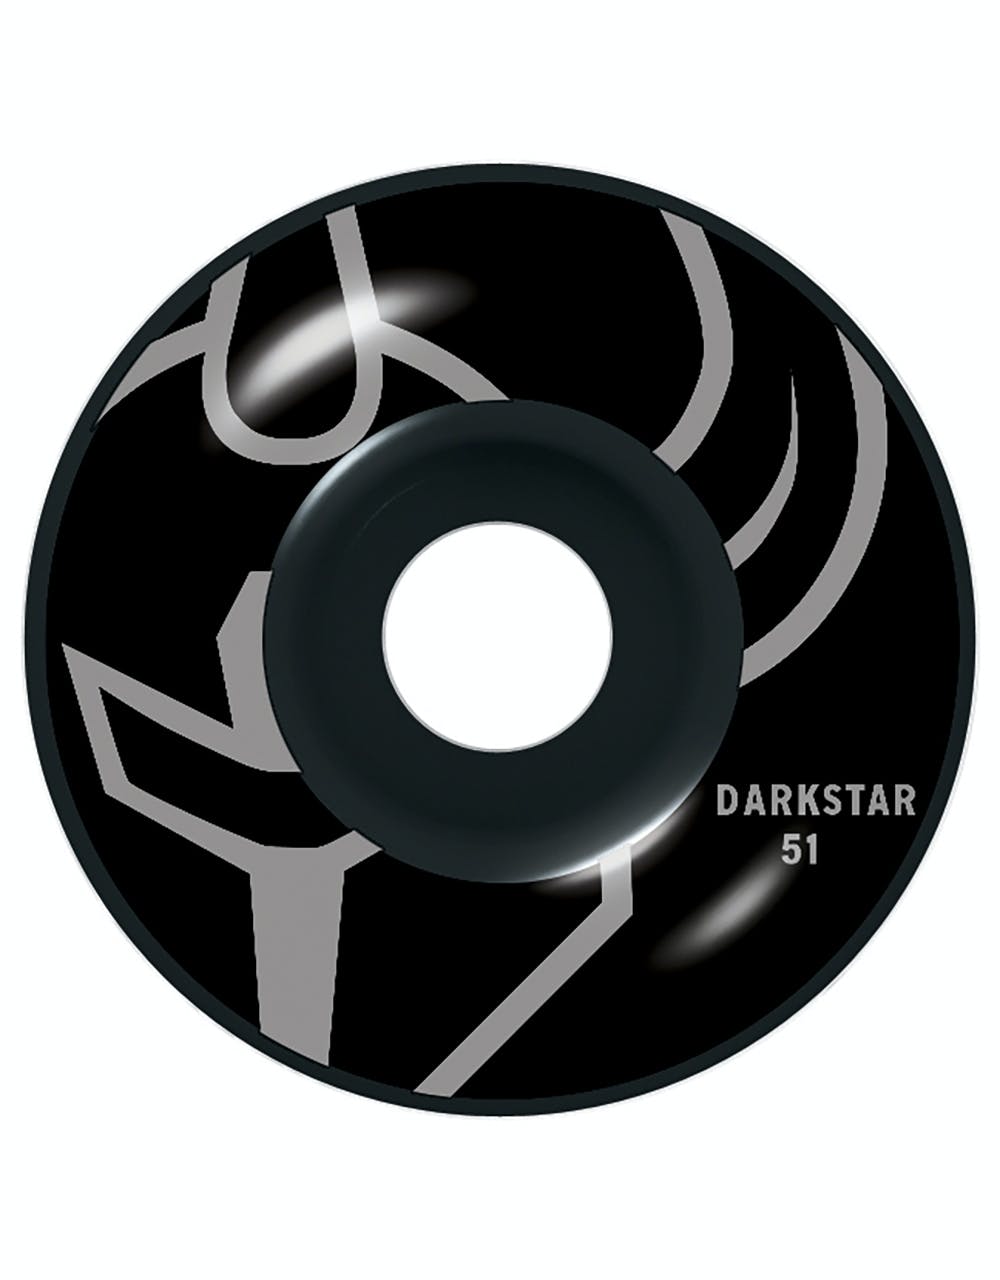 Darkstar Umbra Mid Premium Complete Skateboard - 7.25"